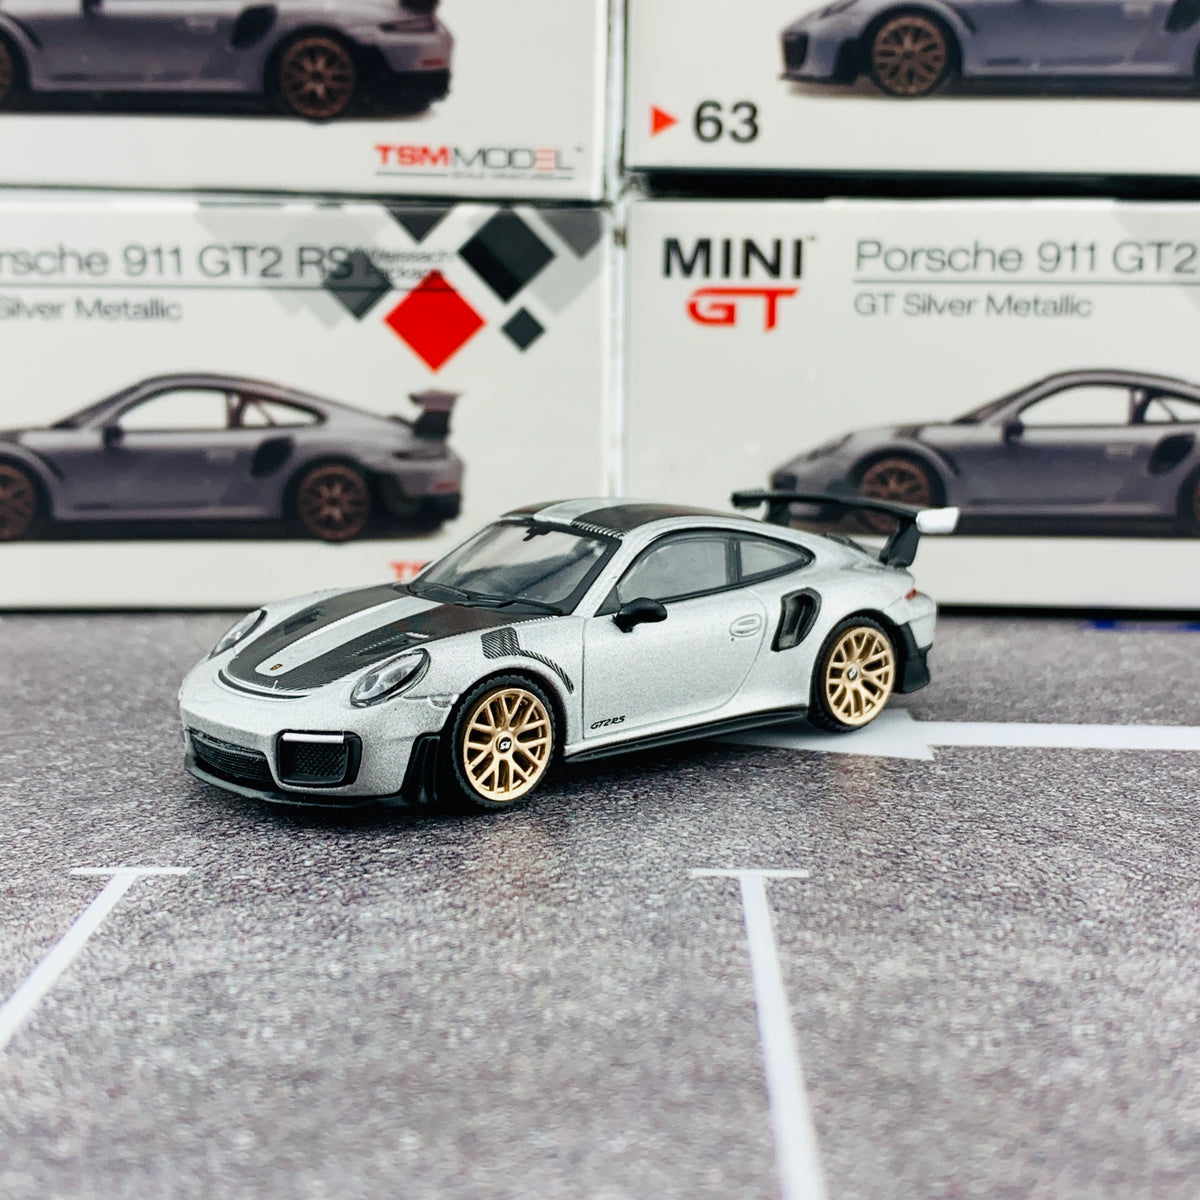 MINI GT 1/64 Porsche 911 Turbo GT2 RS GT Weissach Package Silver Metal